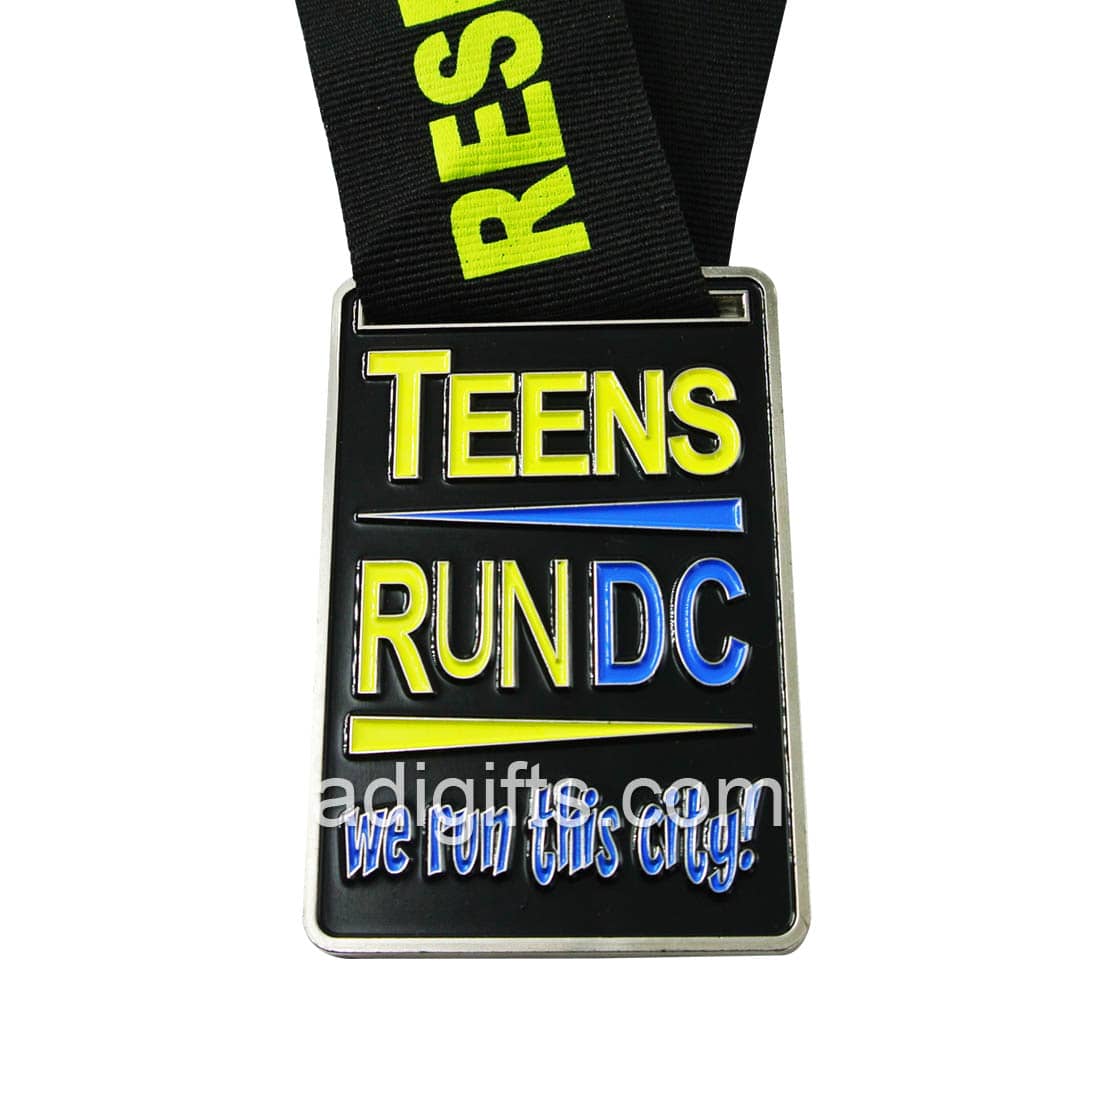 Teens Run Dc company 